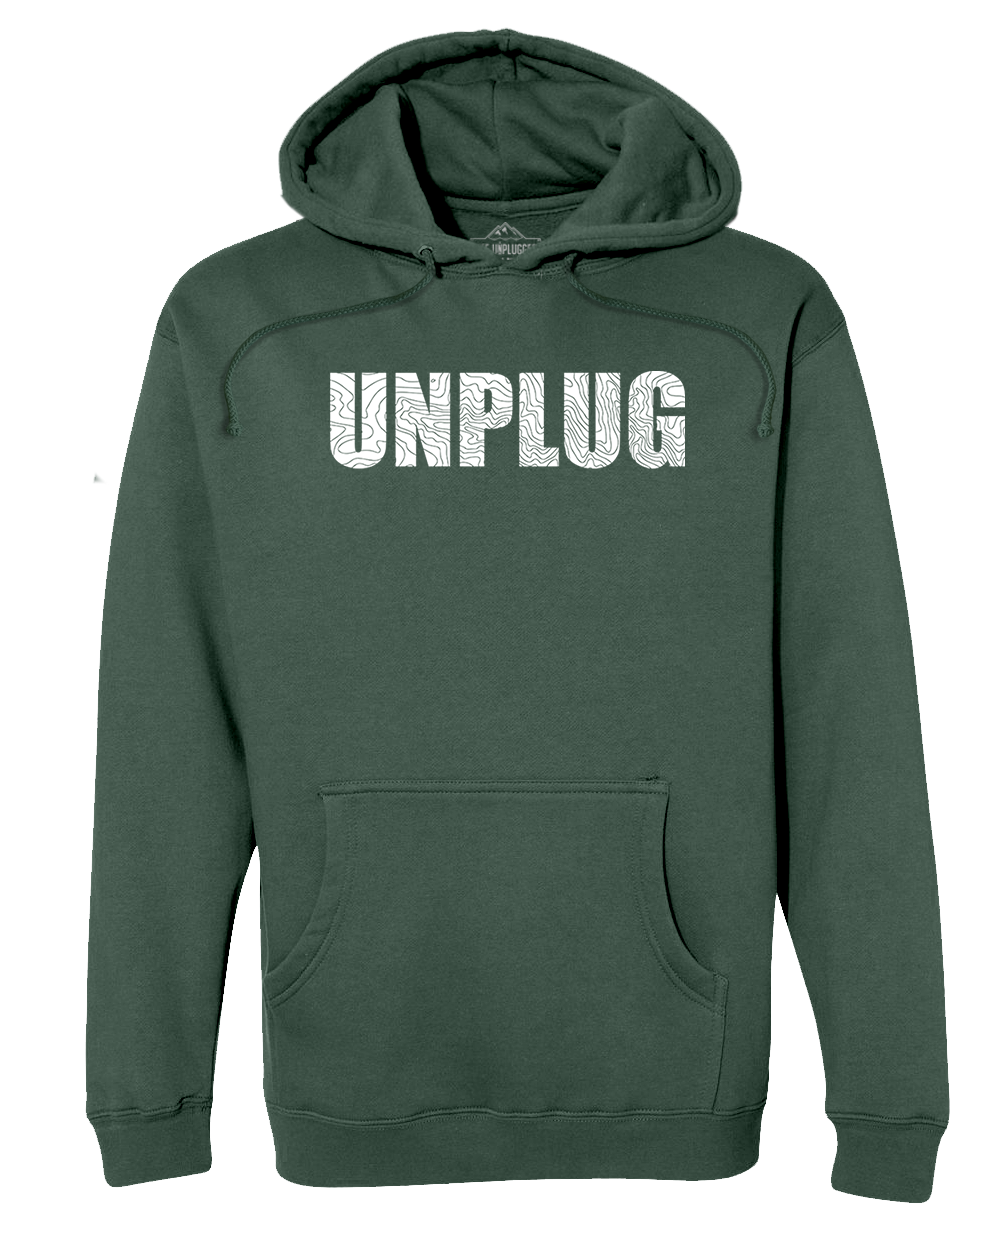 Unplug Topo Map Premium Heavyweight Hooded Sweatshirt